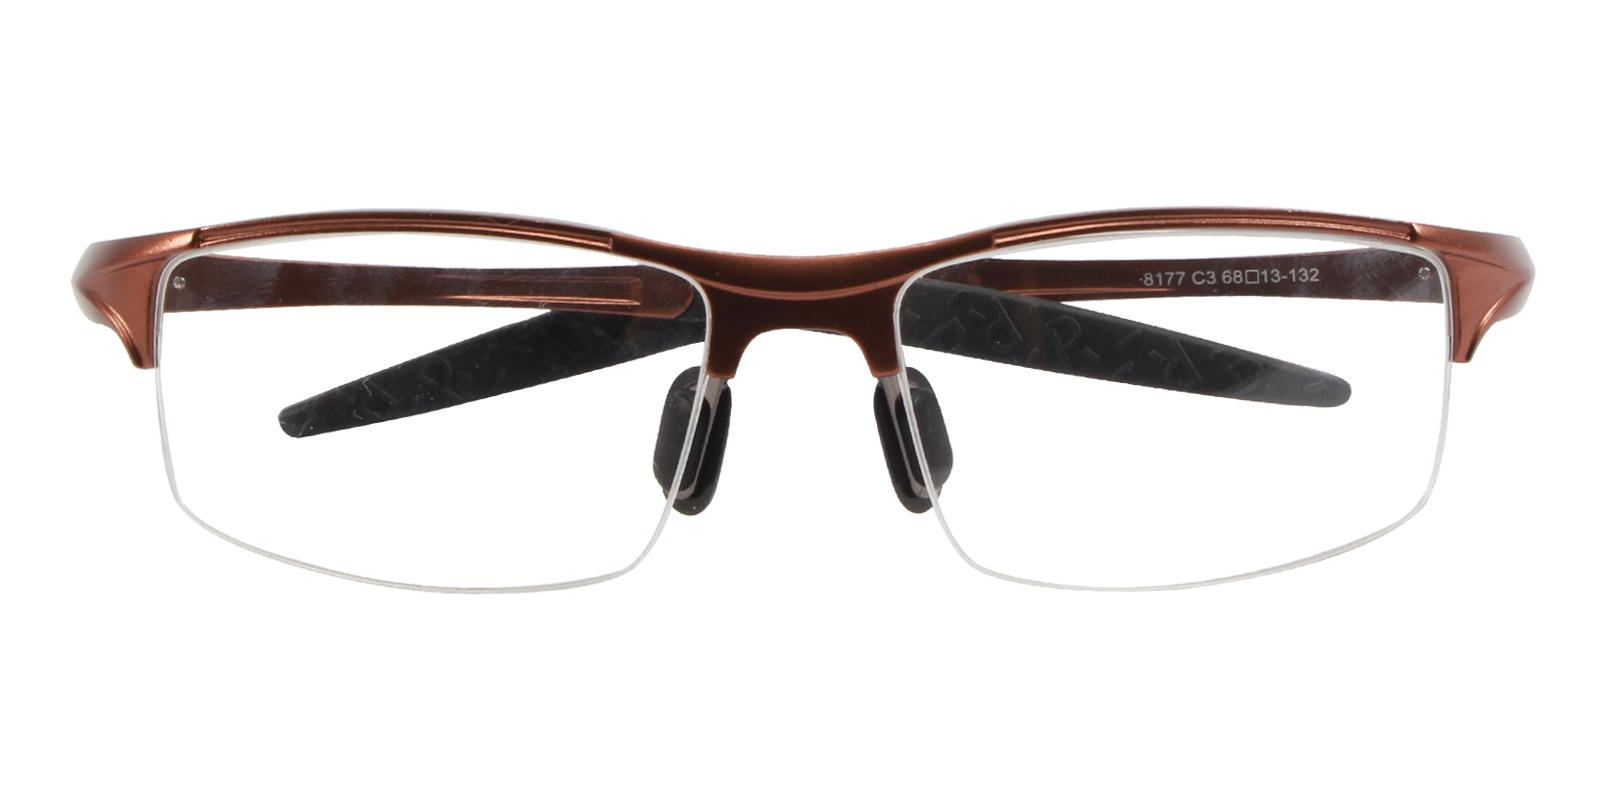 Alan Brown Metal NosePads , SportsGlasses , SpringHinges Frames from ABBE Glasses